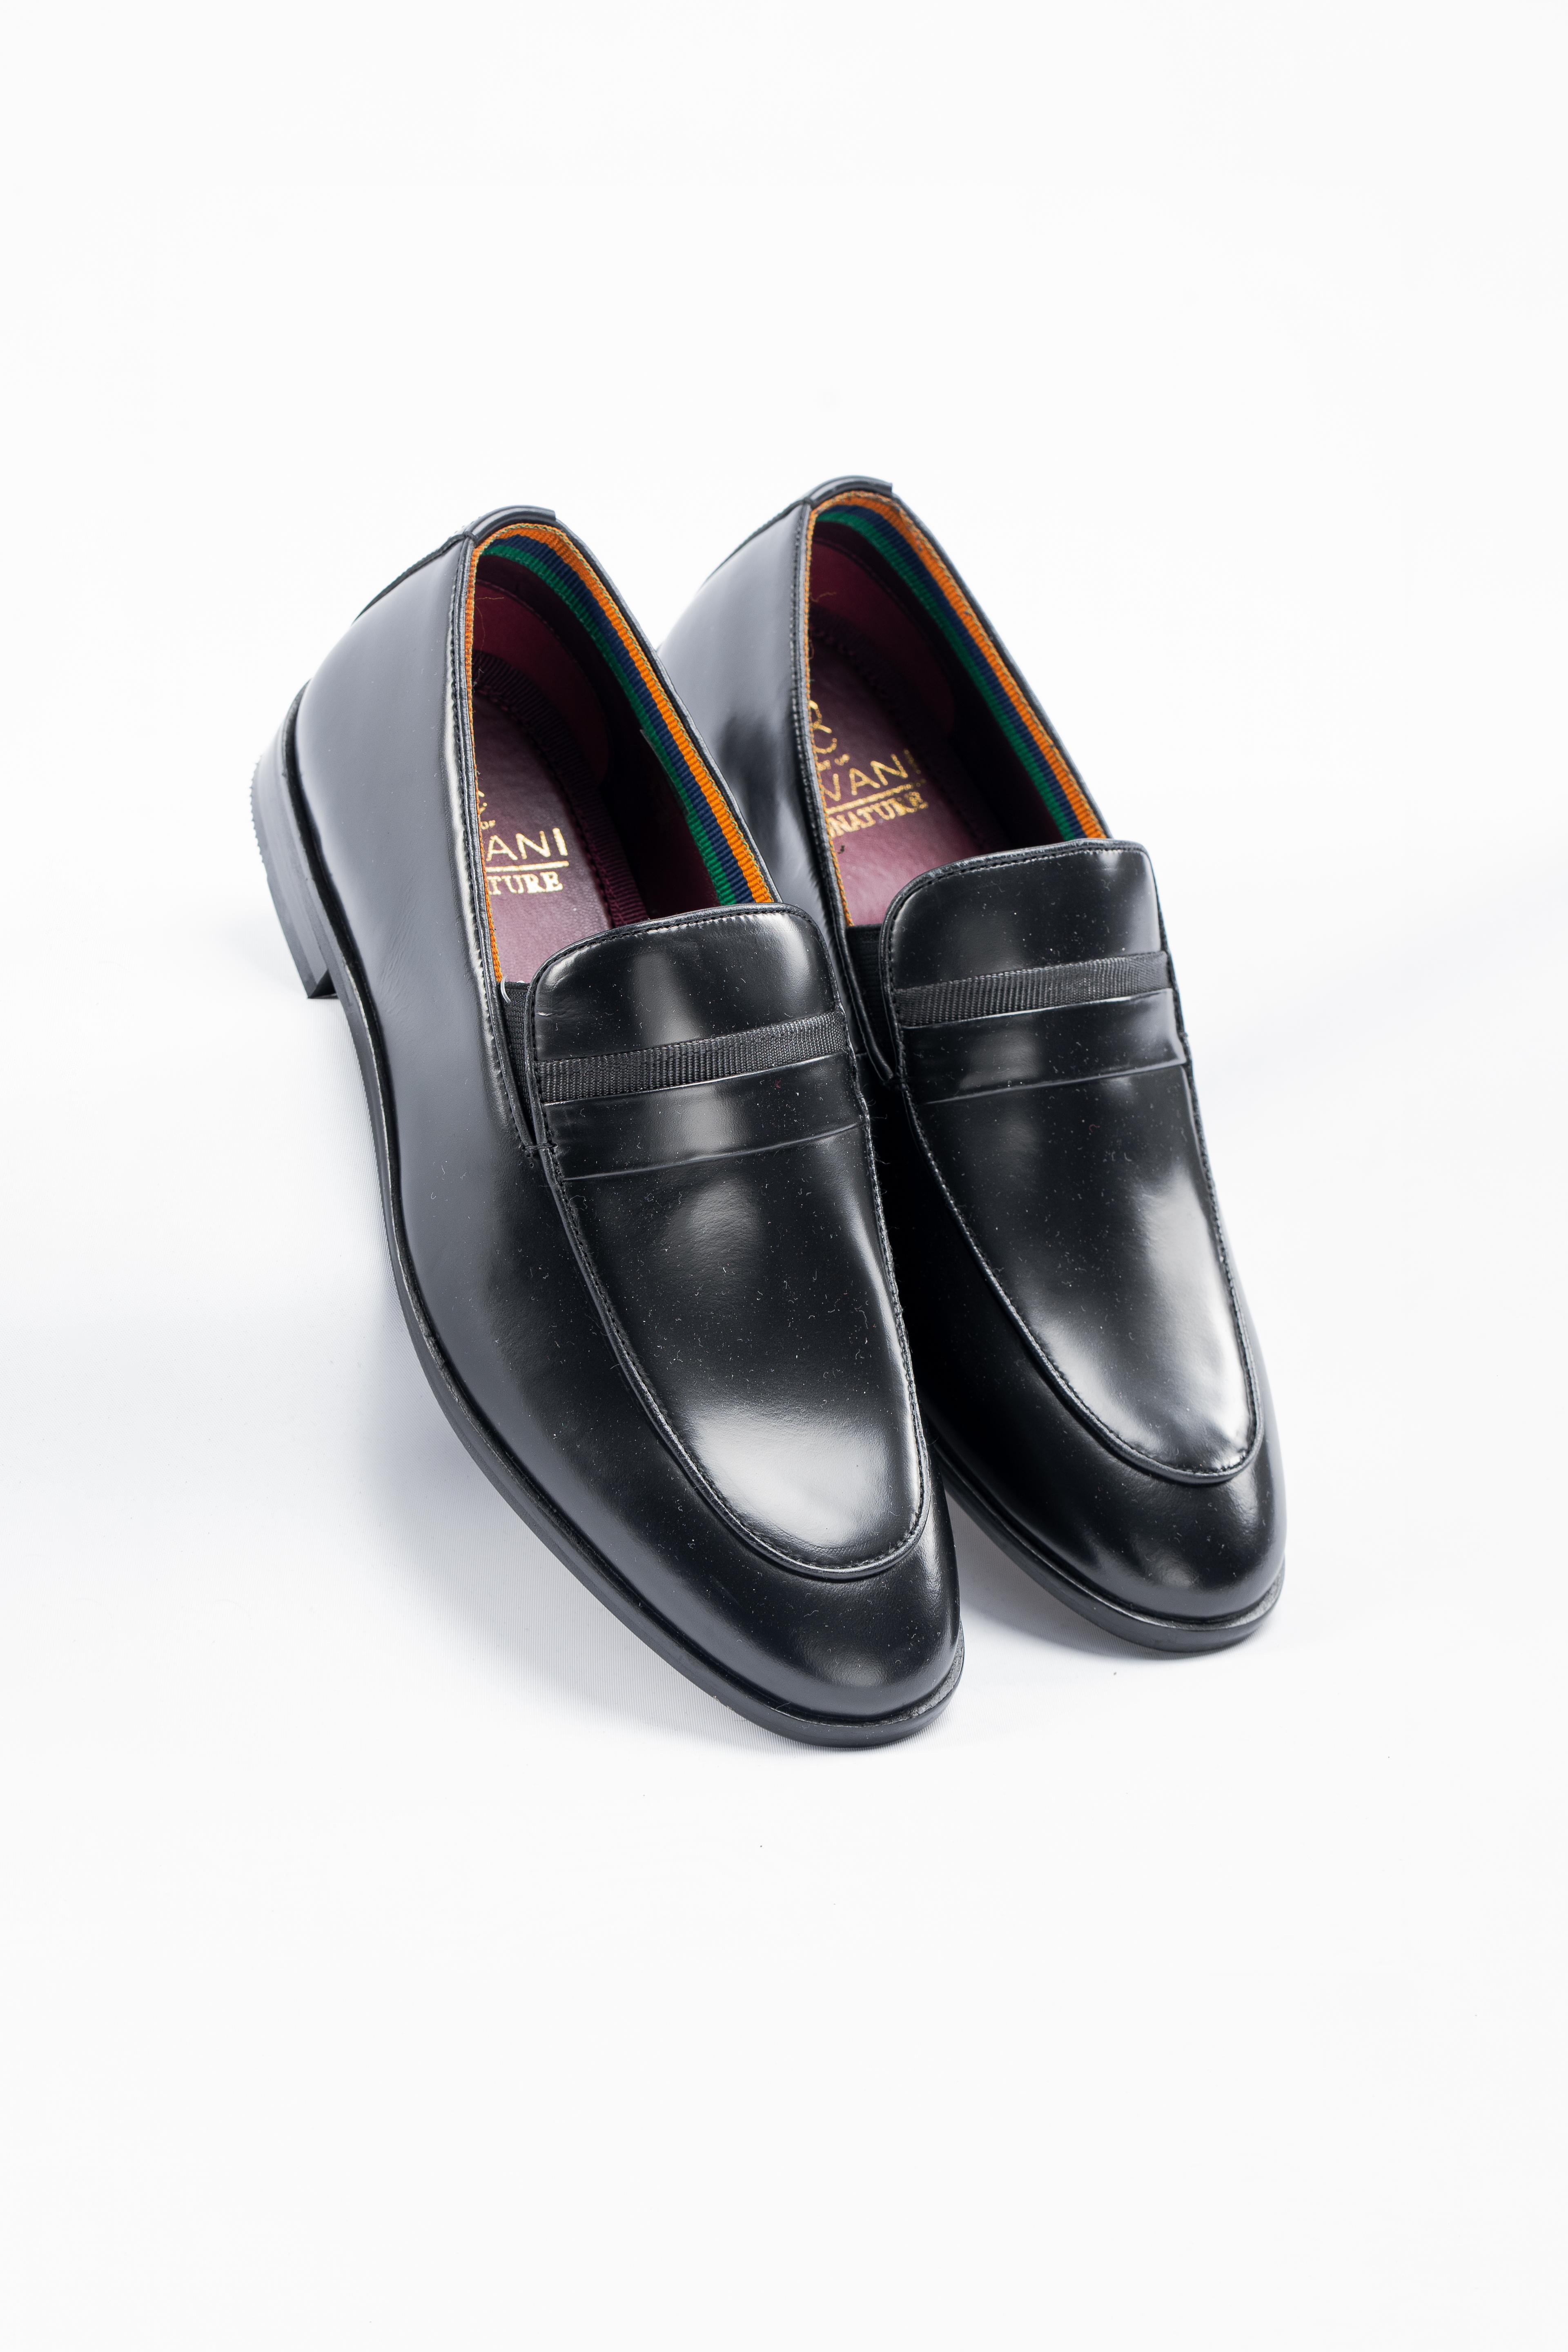 Men's Calssic Black Slip On Loafers - RENO